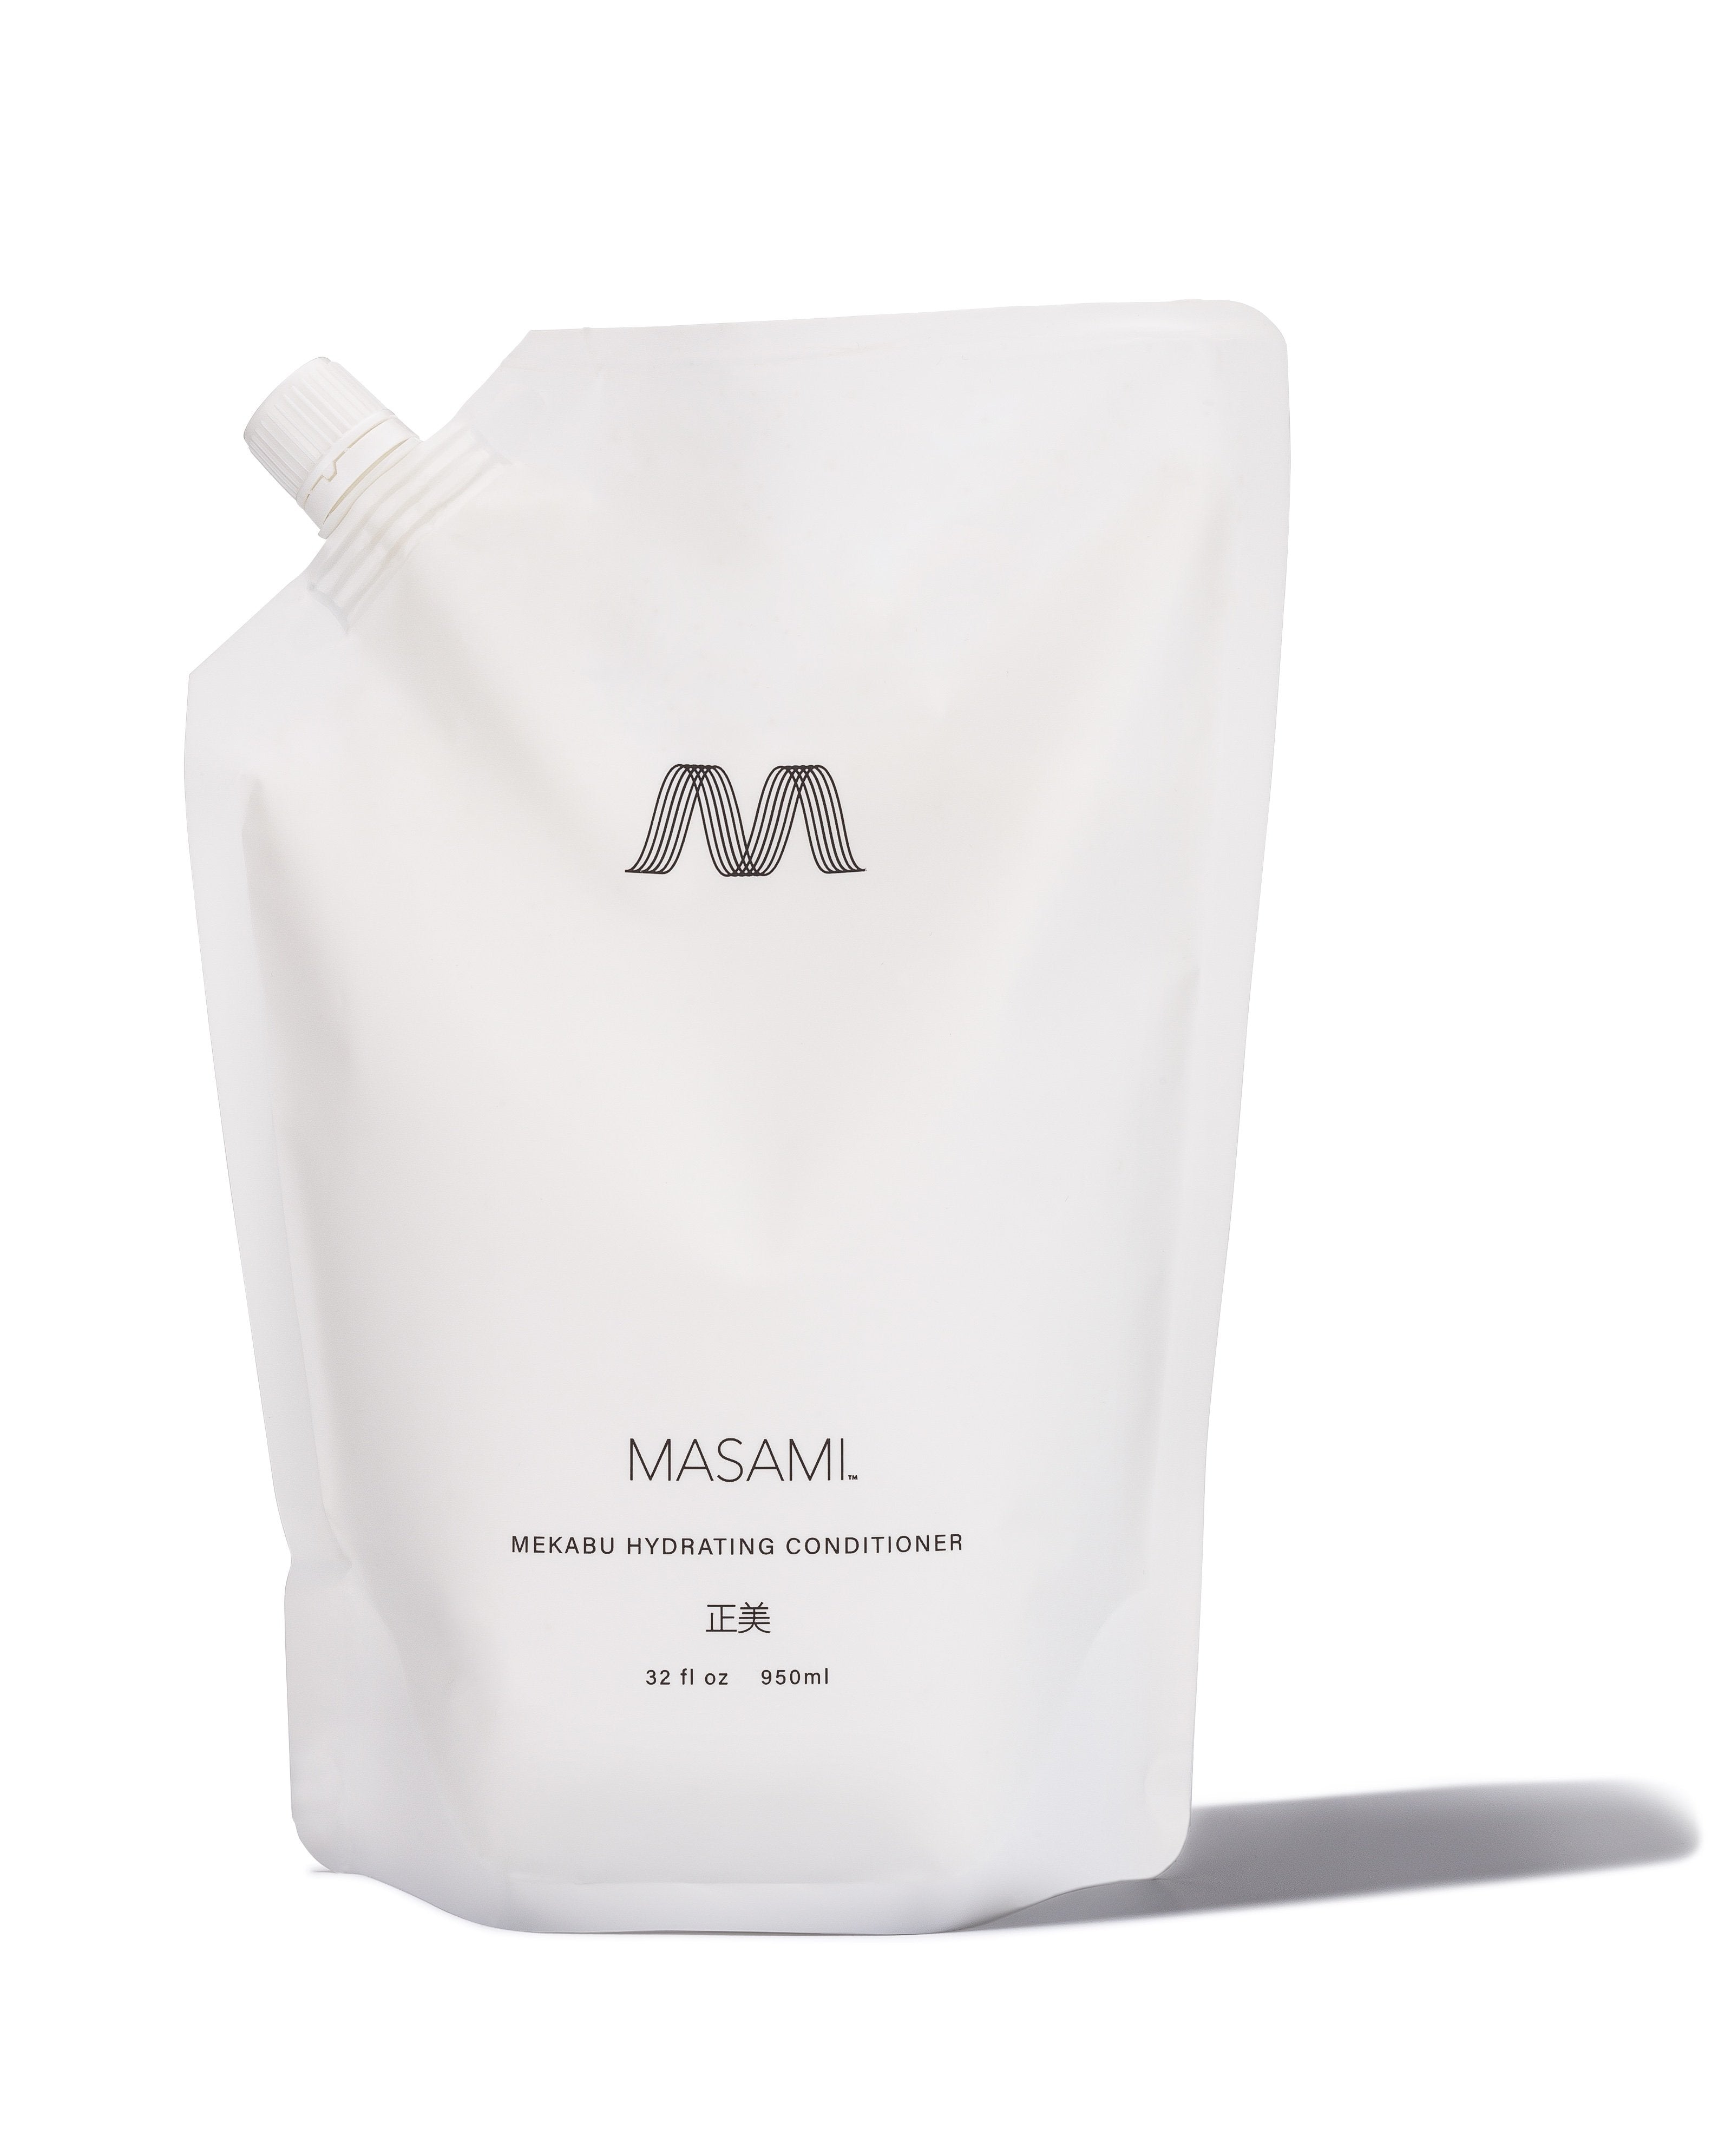 Mekabu Hydrating Conditioner 32 oz Refill Pouch Refills MASAMI 